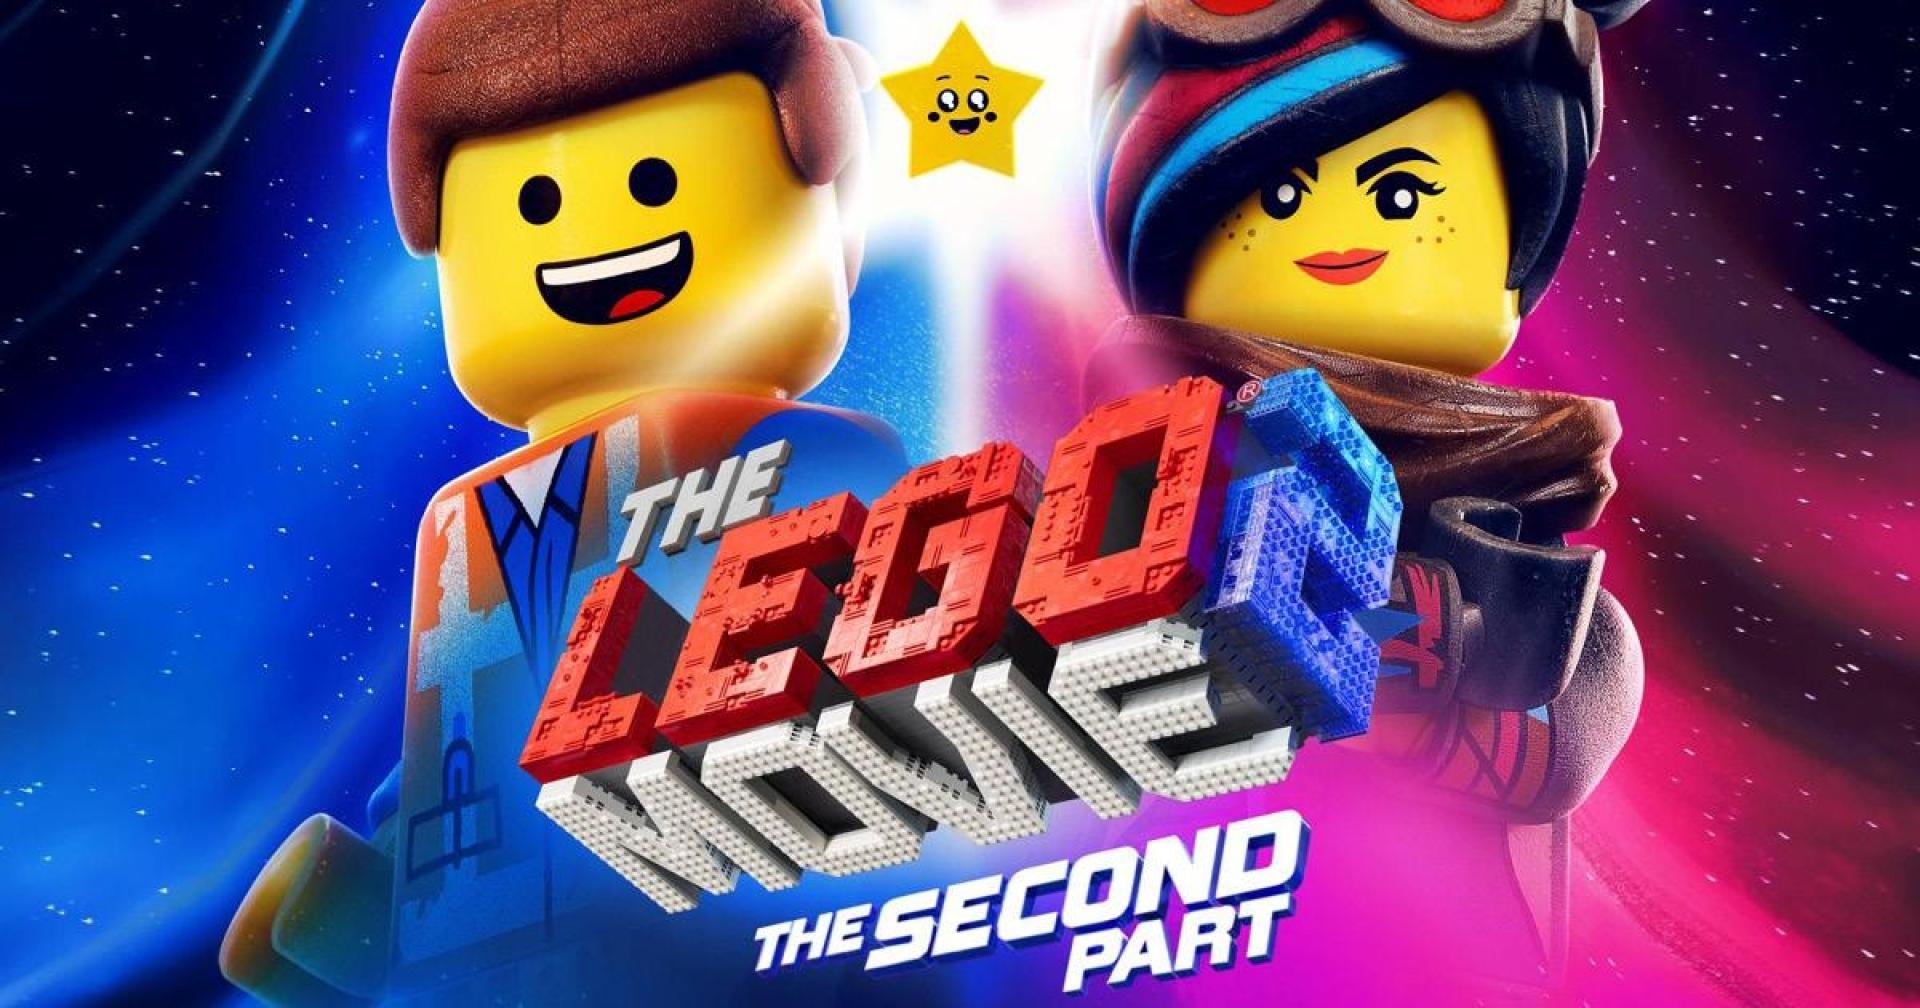 دانلود انیمیشن The Lego Movie 2: The Second Part 2019